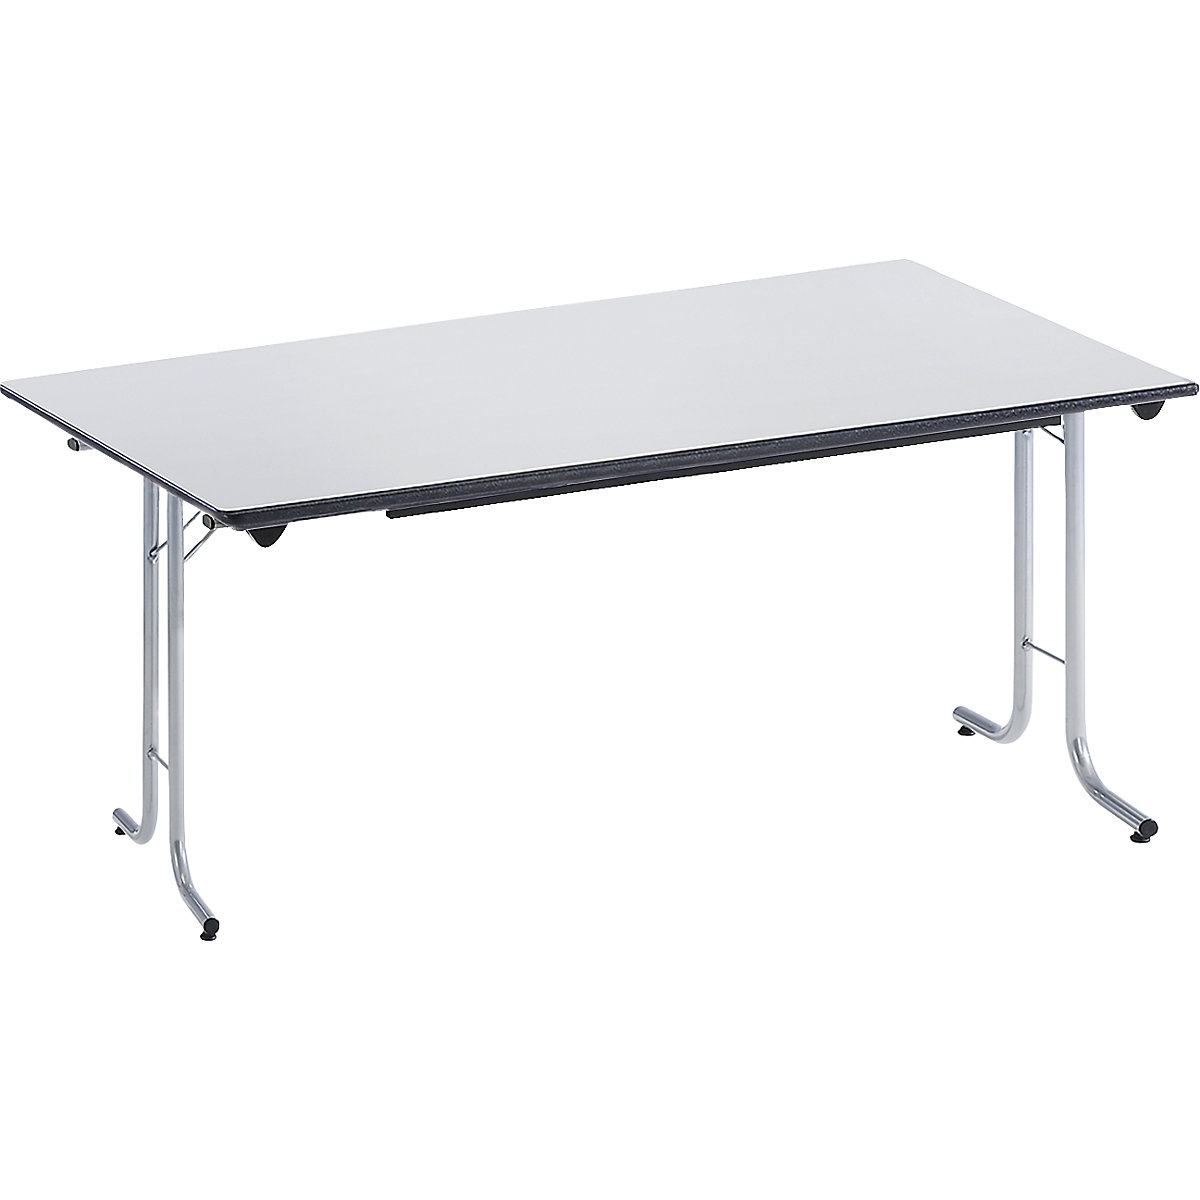 Folding table, with rounded edges, round tubular frame, rectangular top, 1400 x 700 mm, aluminium coloured frame, light grey tabletop-4